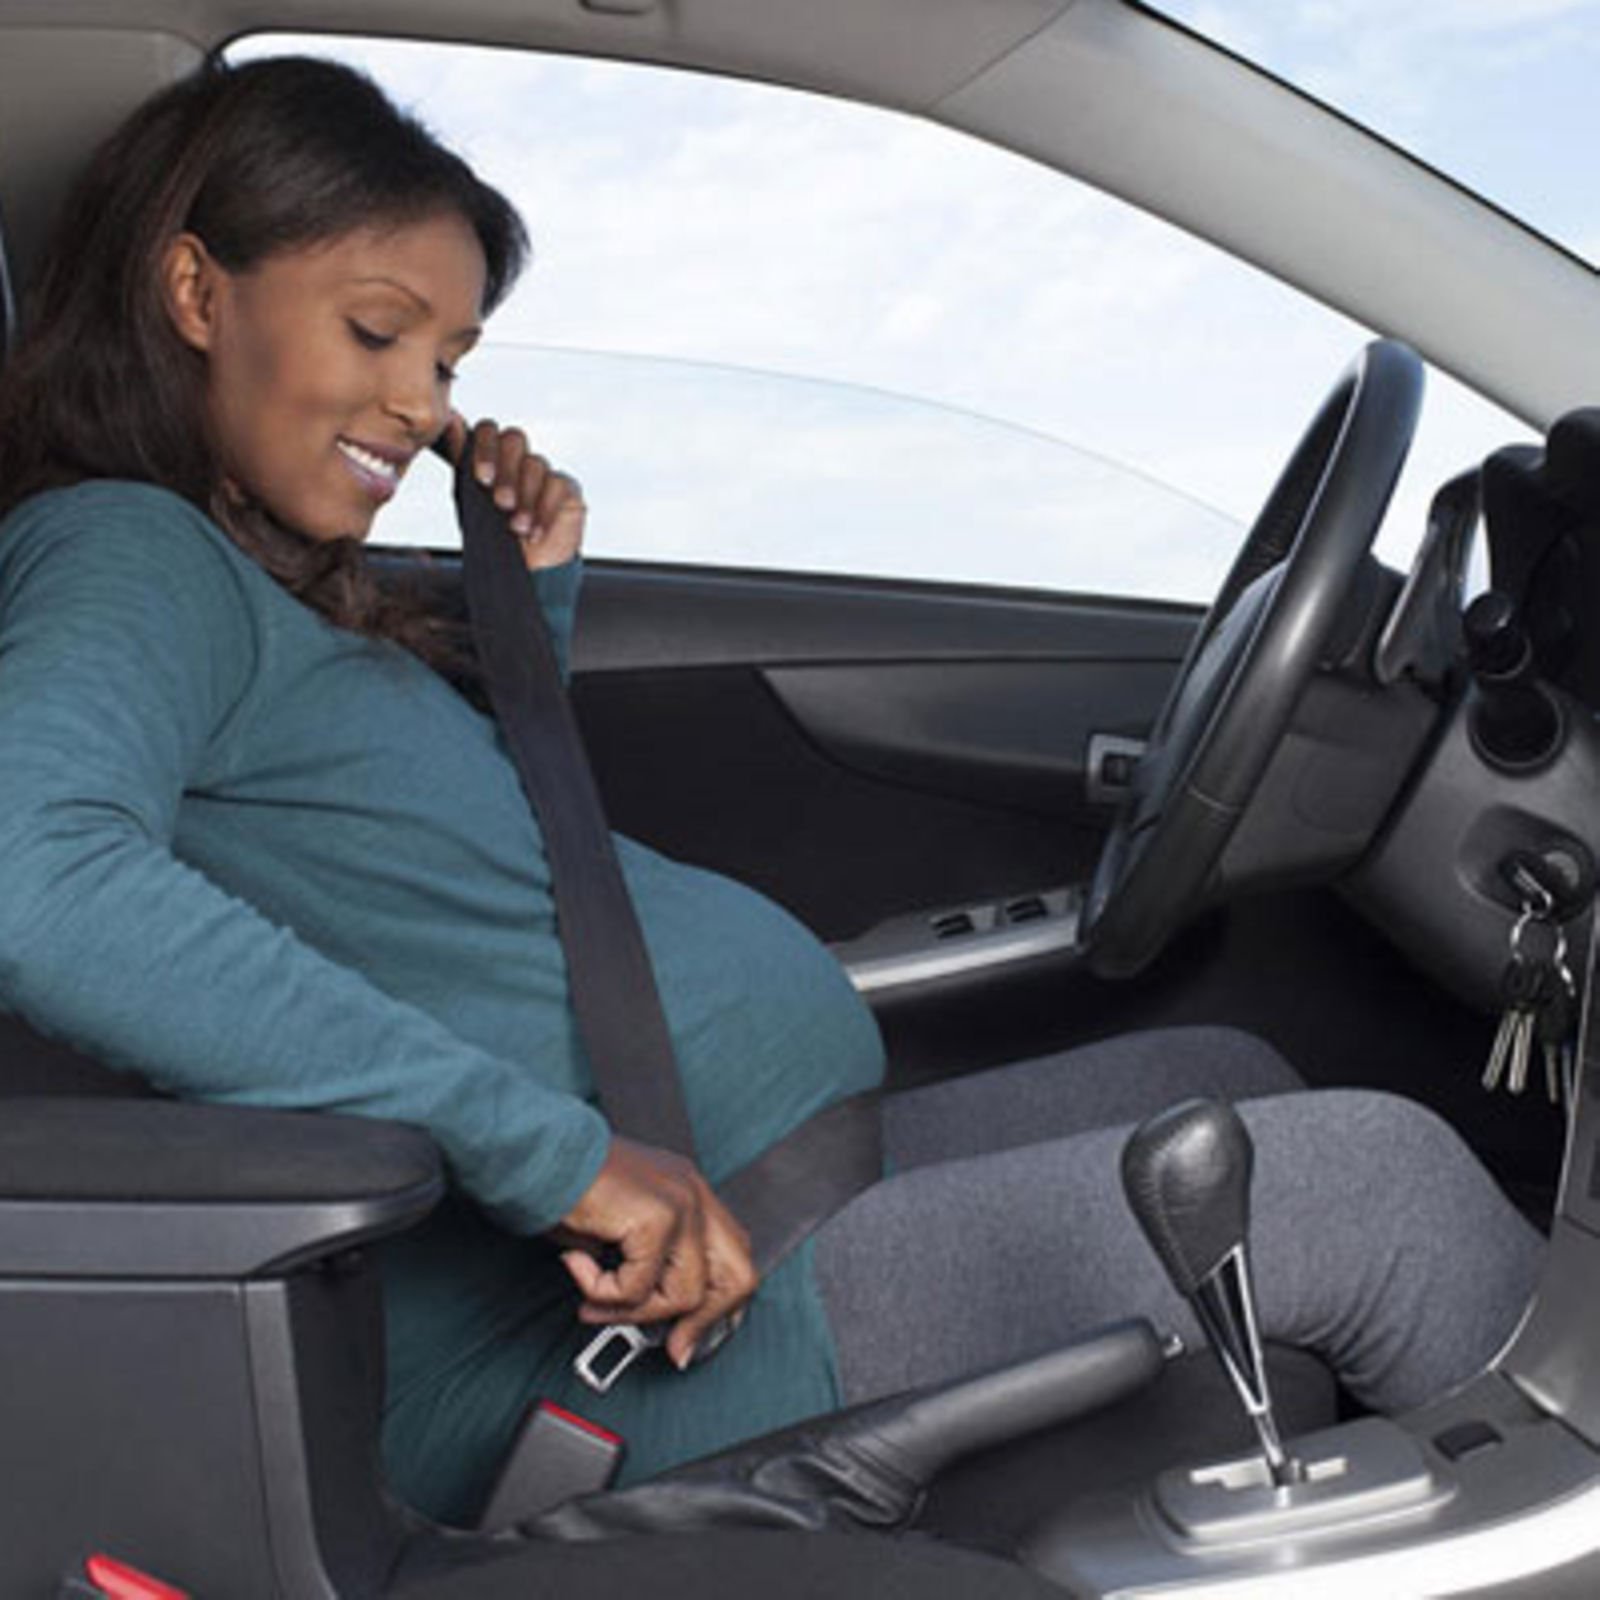 Should Pregnant Women Drive?